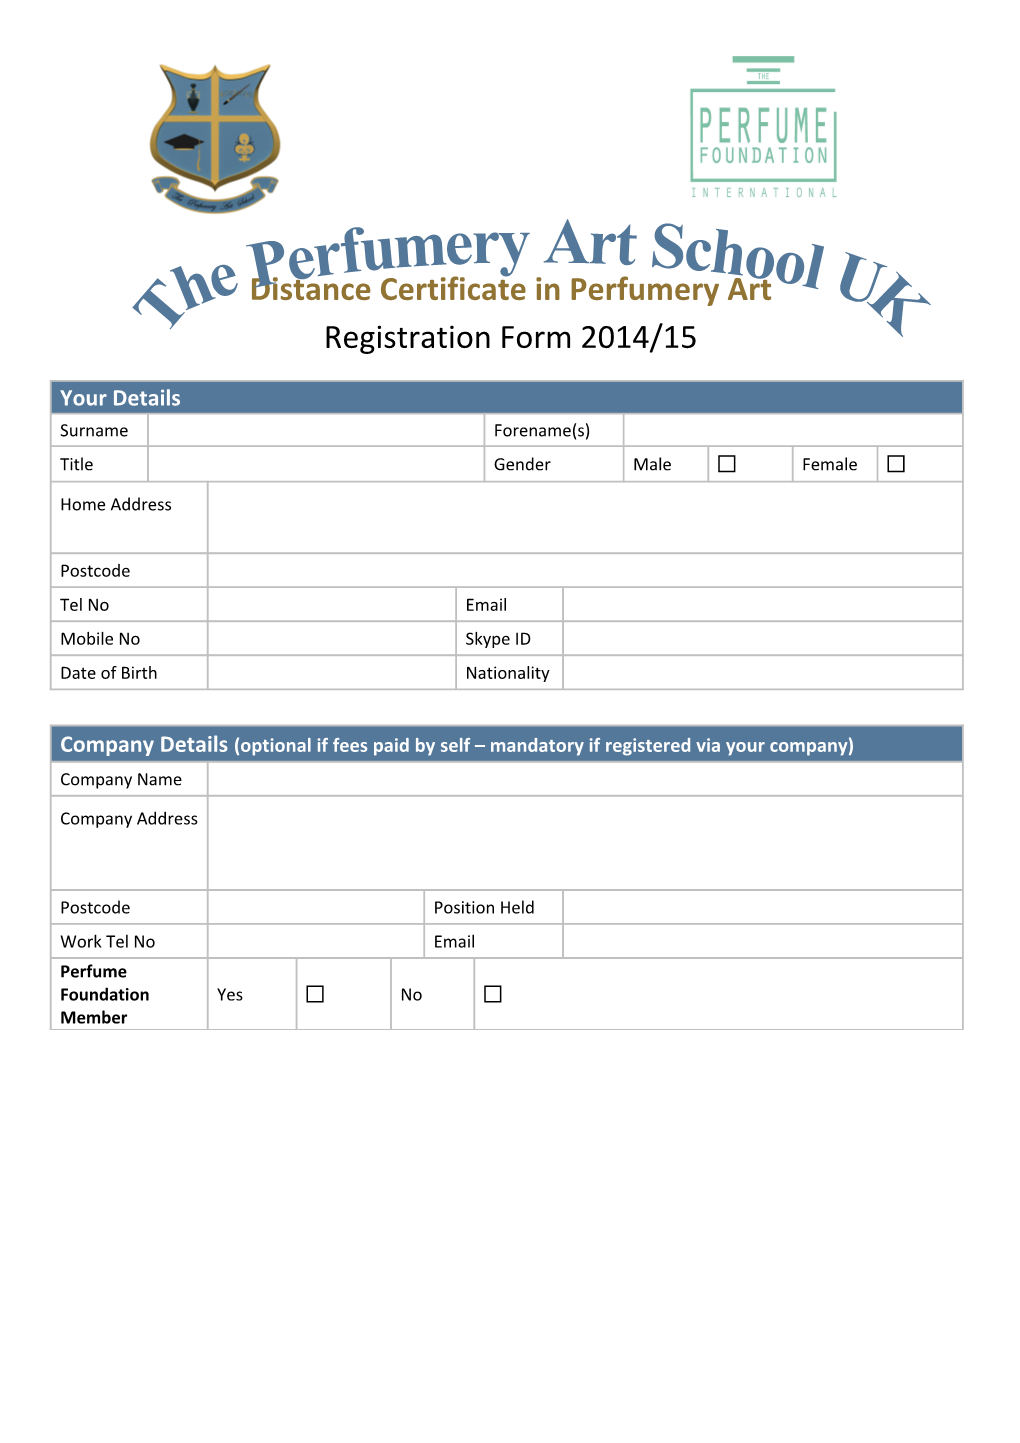 The Perfumery Art School